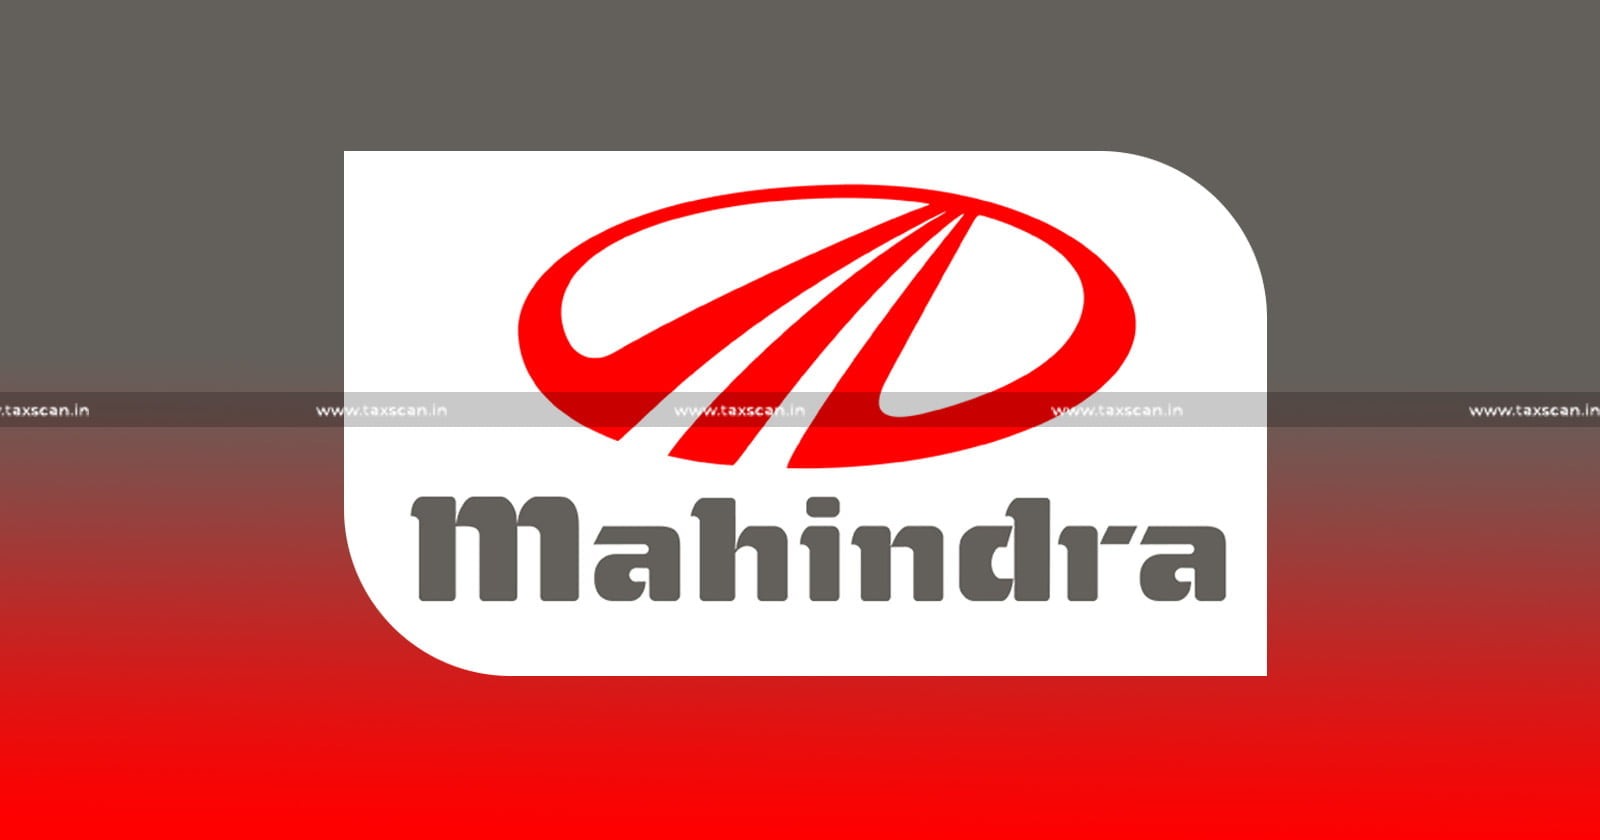 MBA Vacancy in Mahindra - MBA - Mahindra - Mahindra careers - TAXSCAN